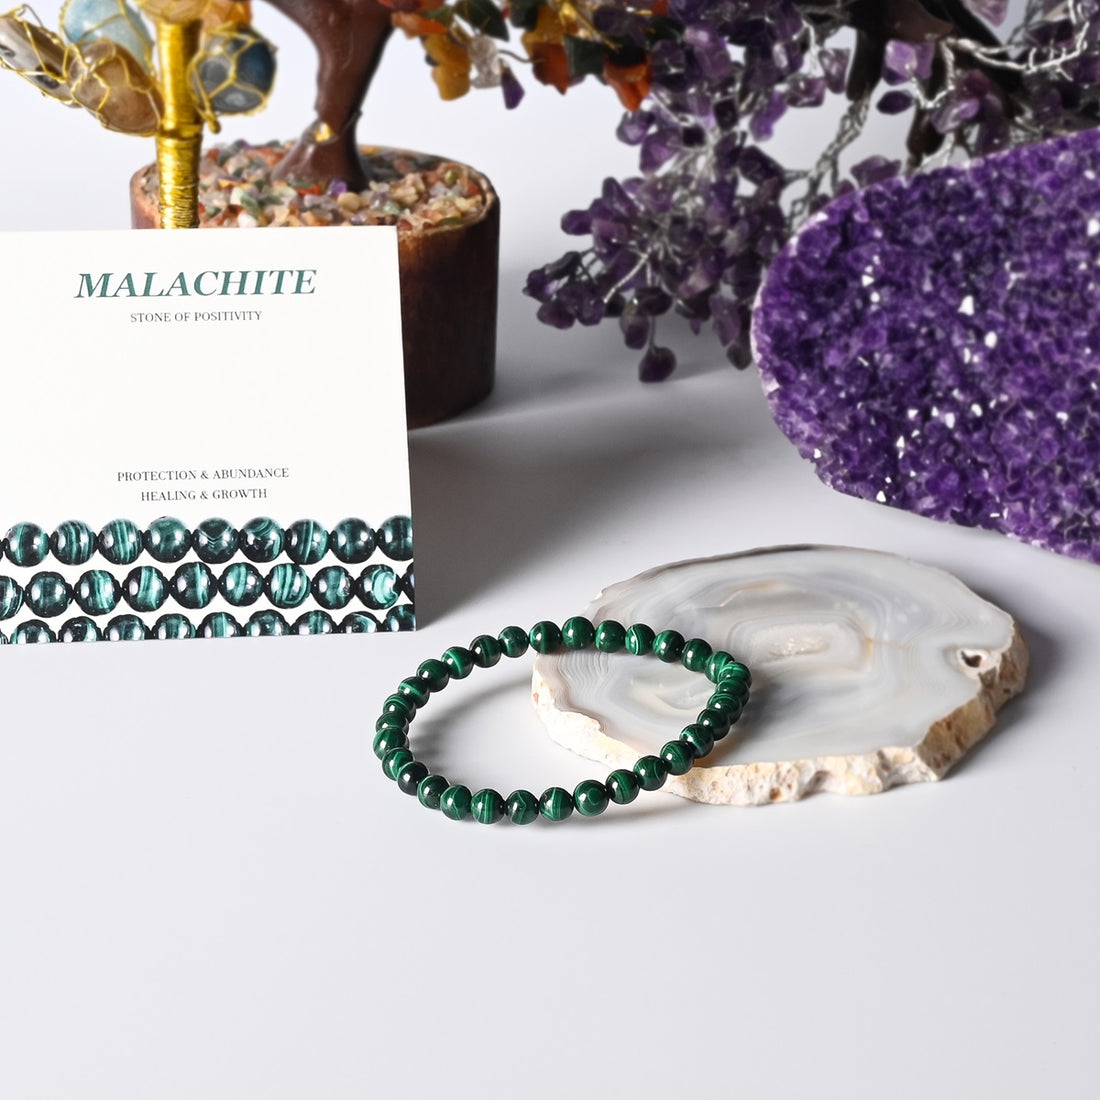 Stylish Malachite Stretch Bracelet featuring 6mm beads, radiating positivity and elegance, beautifully adorning the wrist